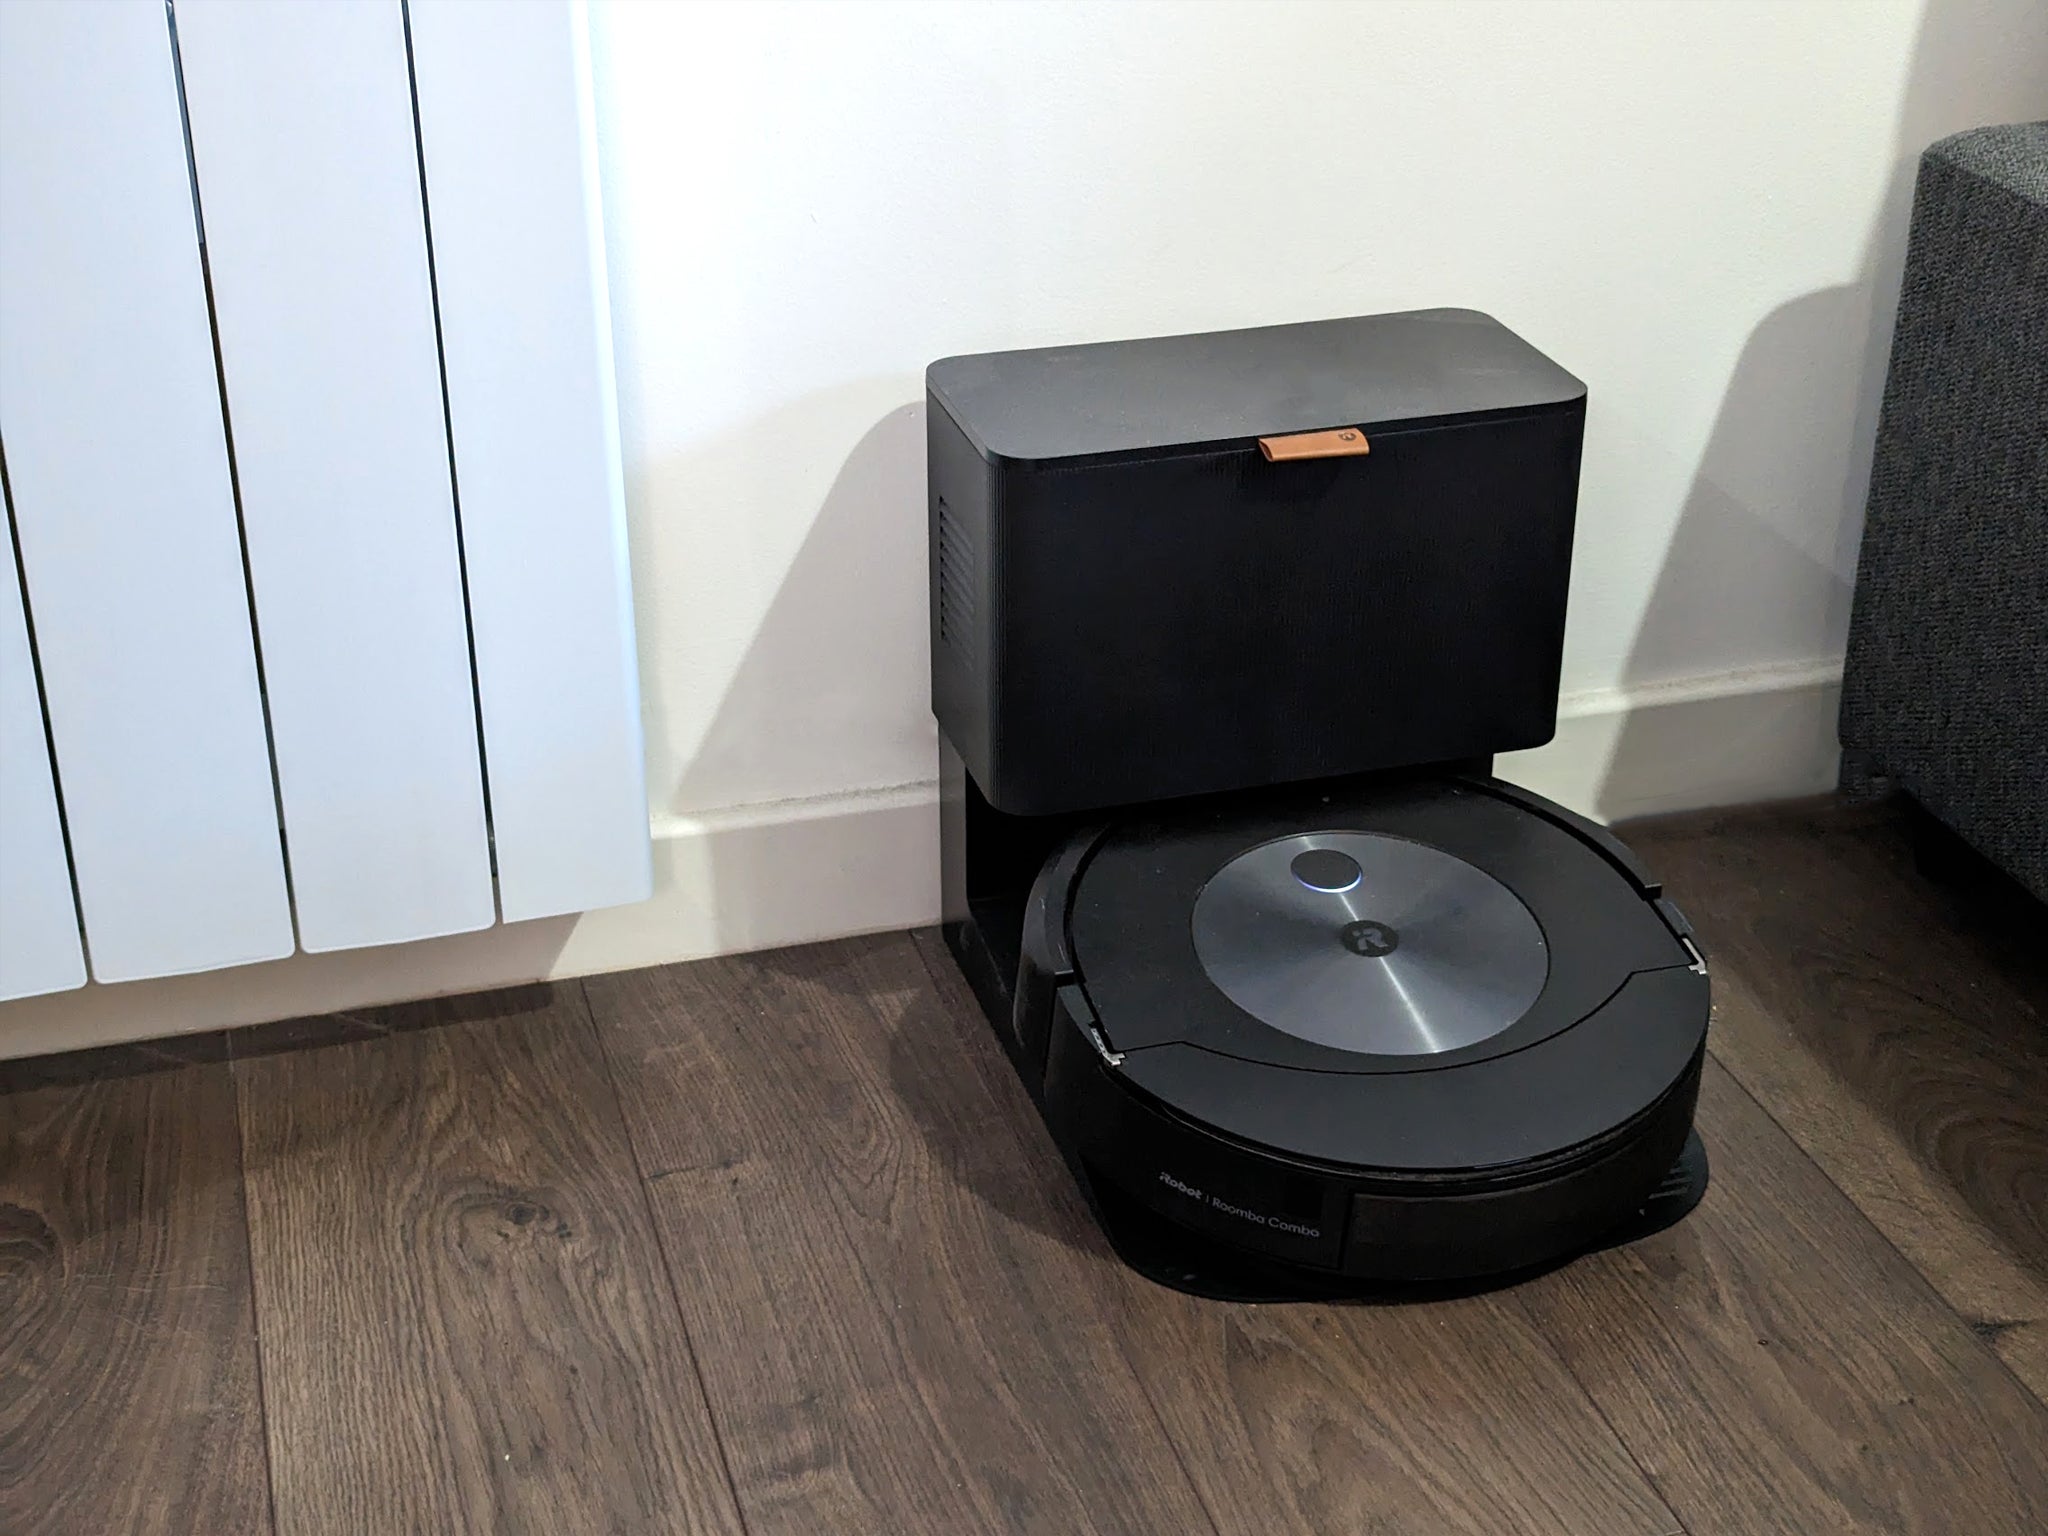 iRobot Roomba Combo j7+ Robot Vacuum Mop Review: Effective, but